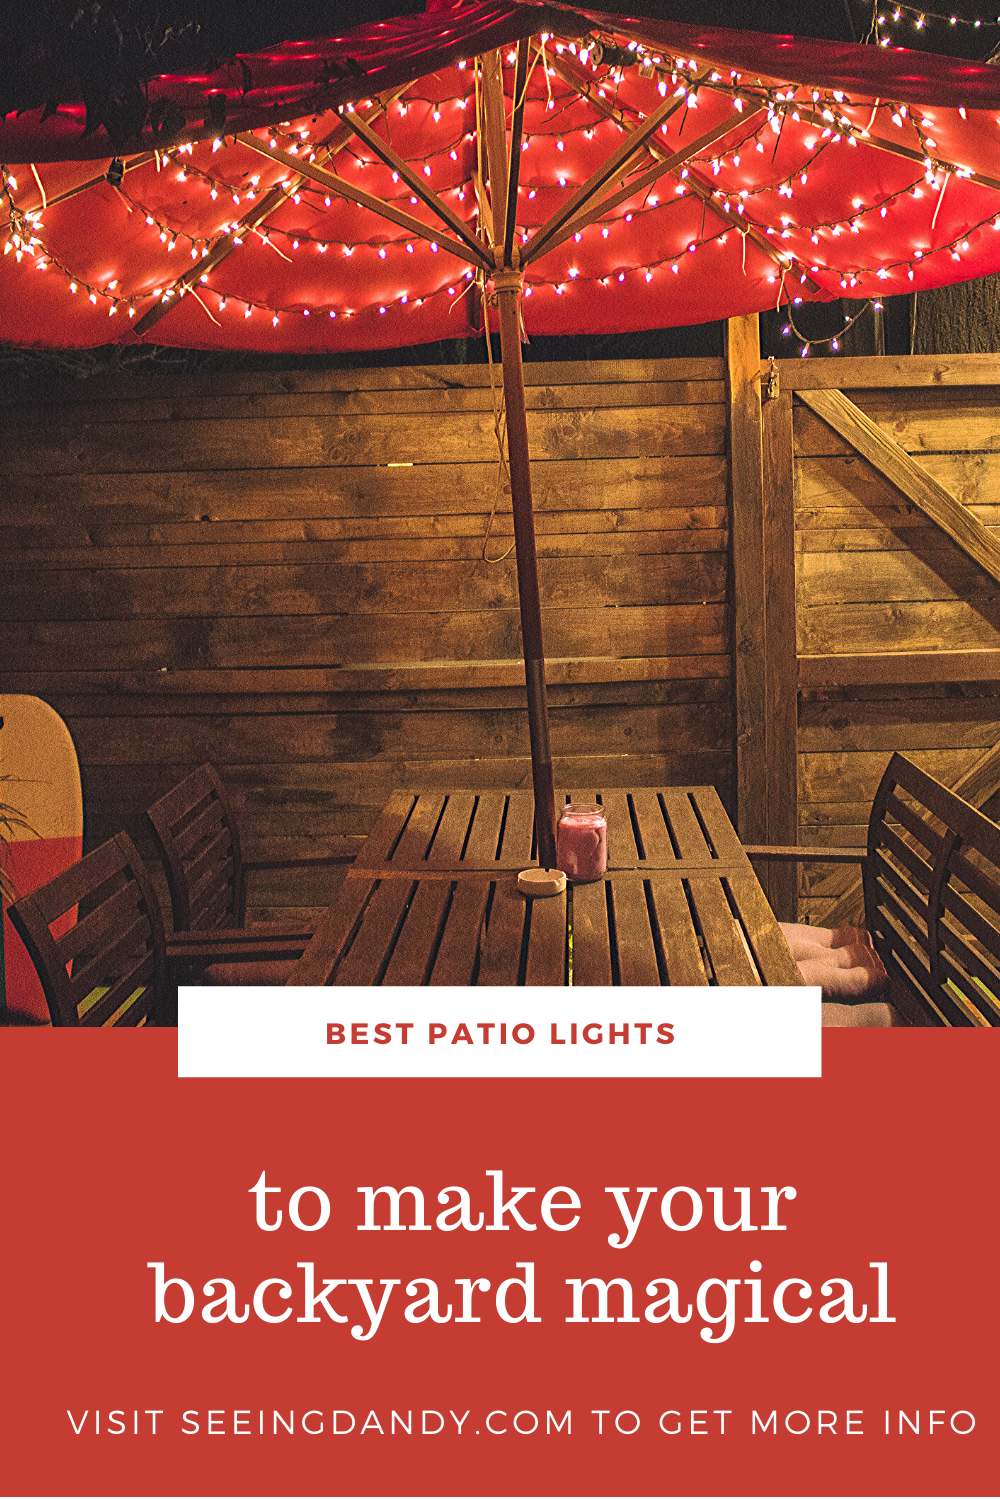 Best patio lights for magical backyard